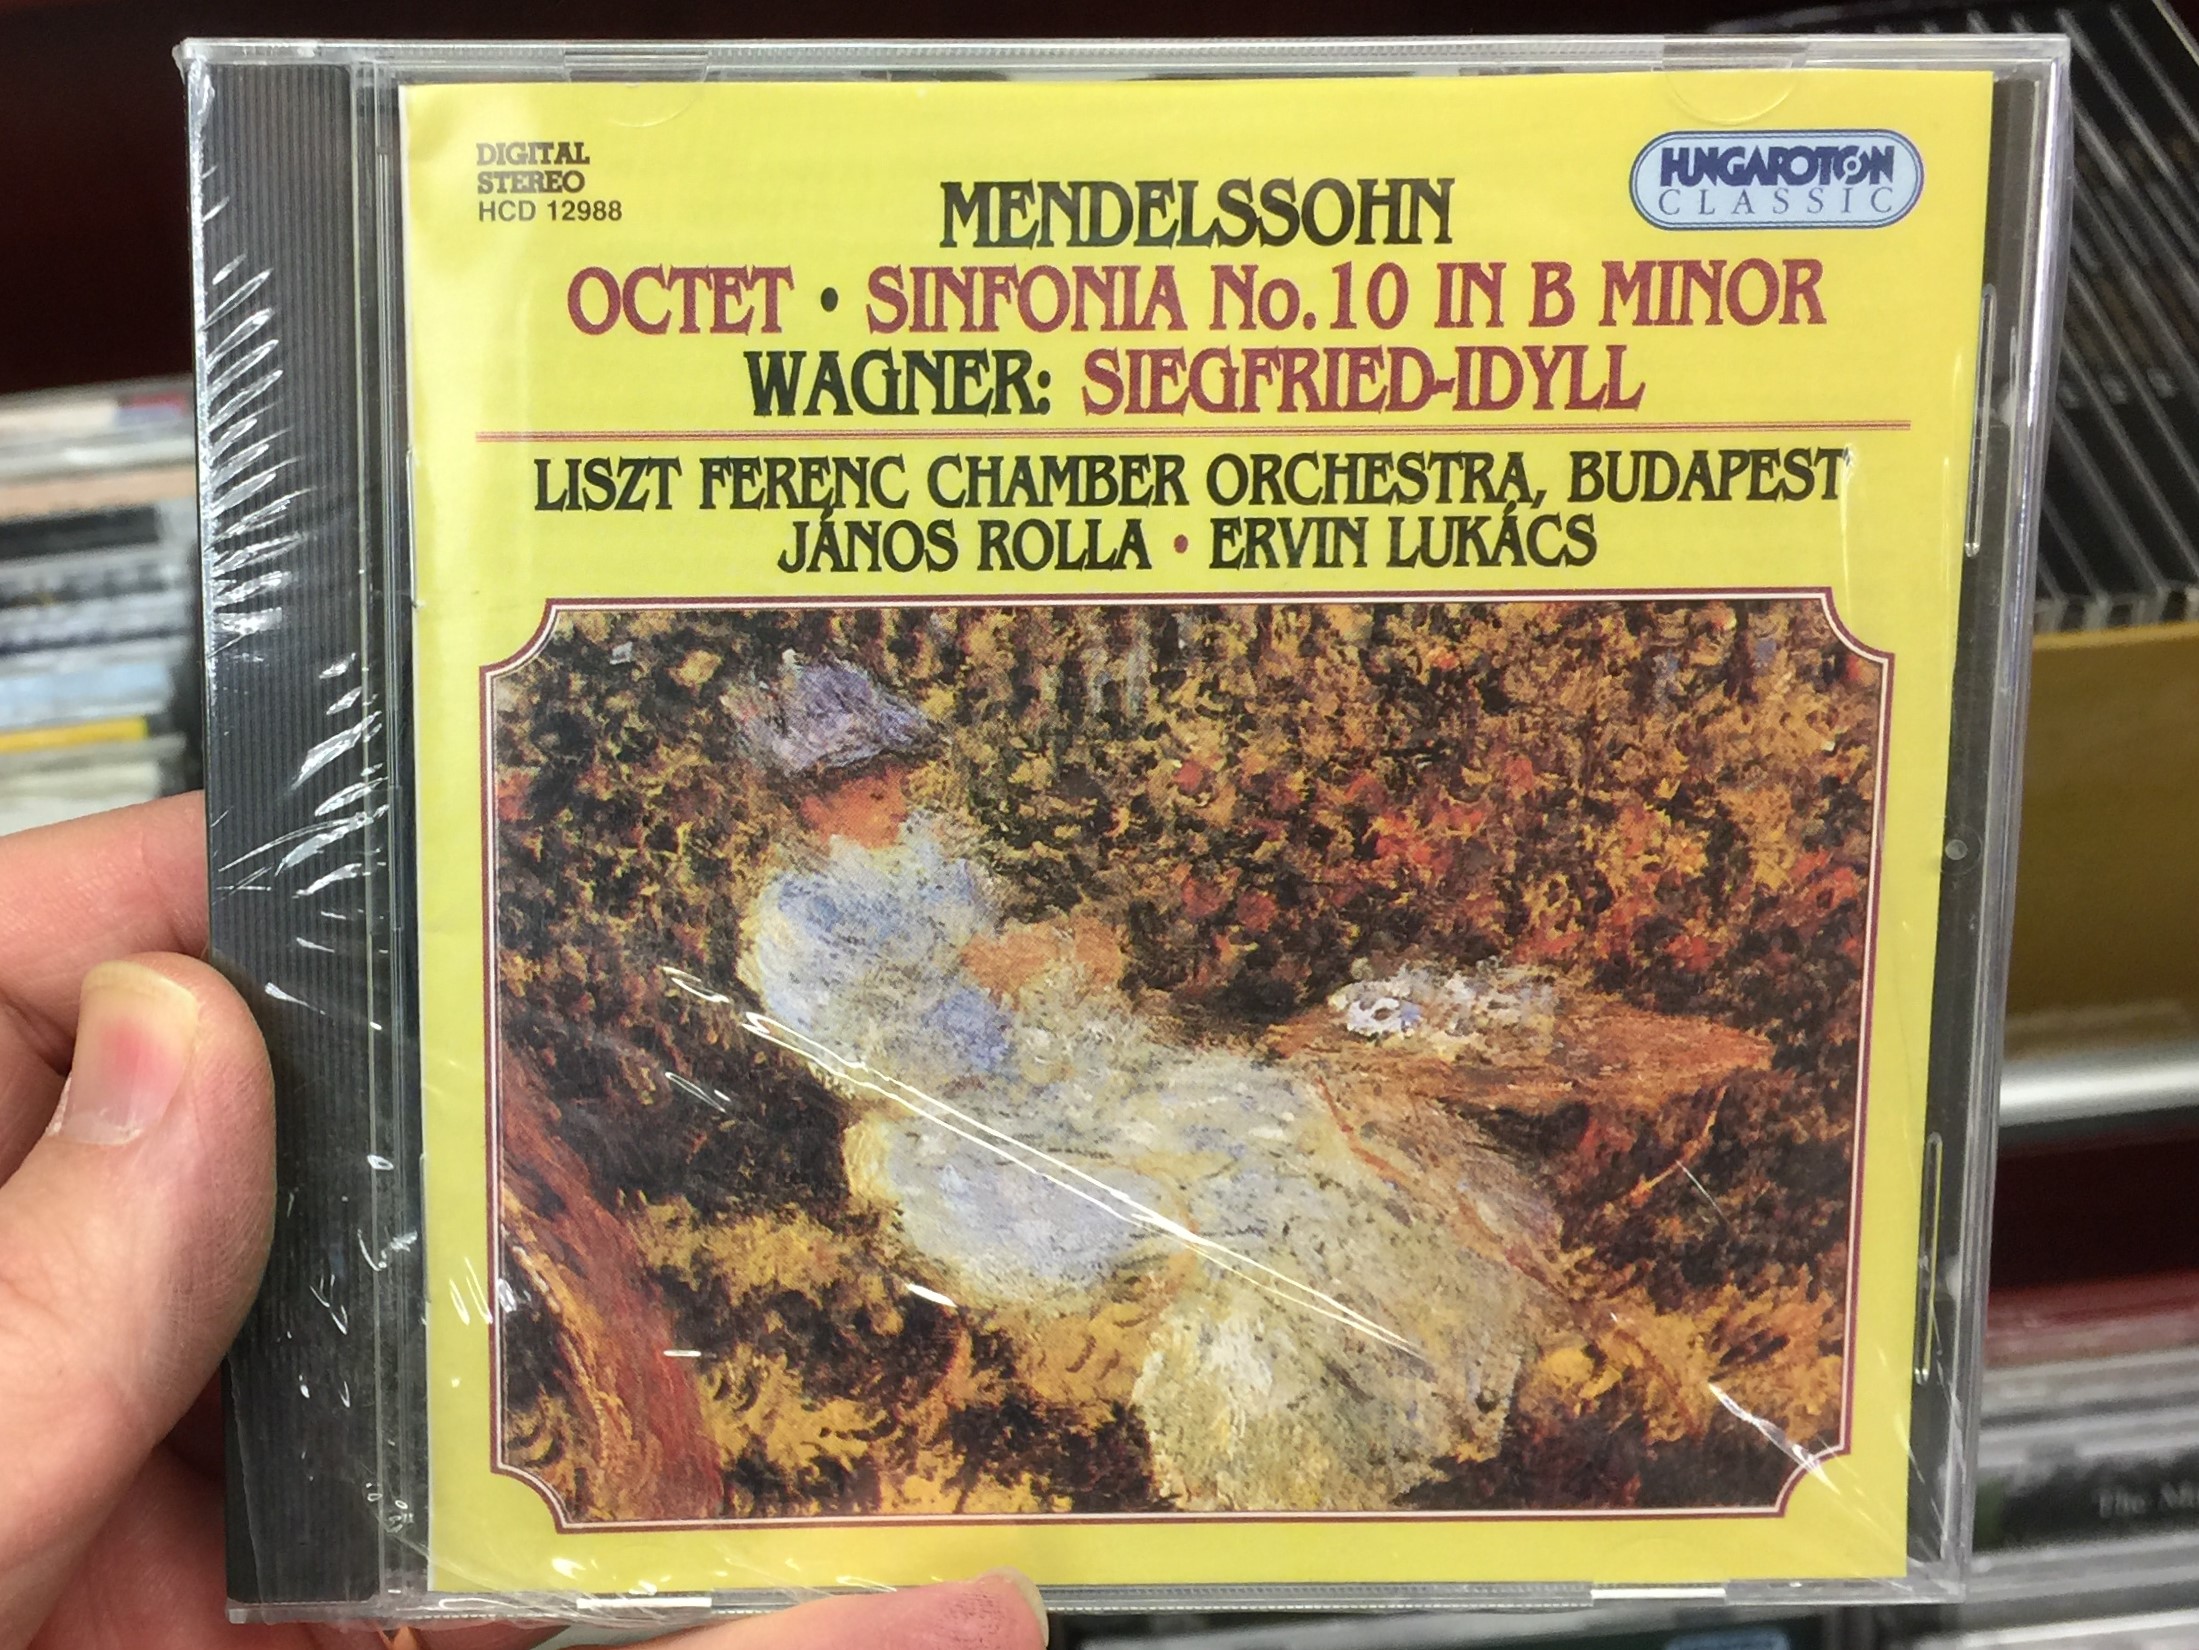 mendelssohn-octet-sinfonia-no.-10-in-b-minor-wagner-siegfried-idyll-liszt-ferenc-chamber-orchestra-budapest-j-nos-rolla-ervin-lukacs-hungaroton-classic-audio-cd-1995-stereo-hcd-12988-1-.jpg